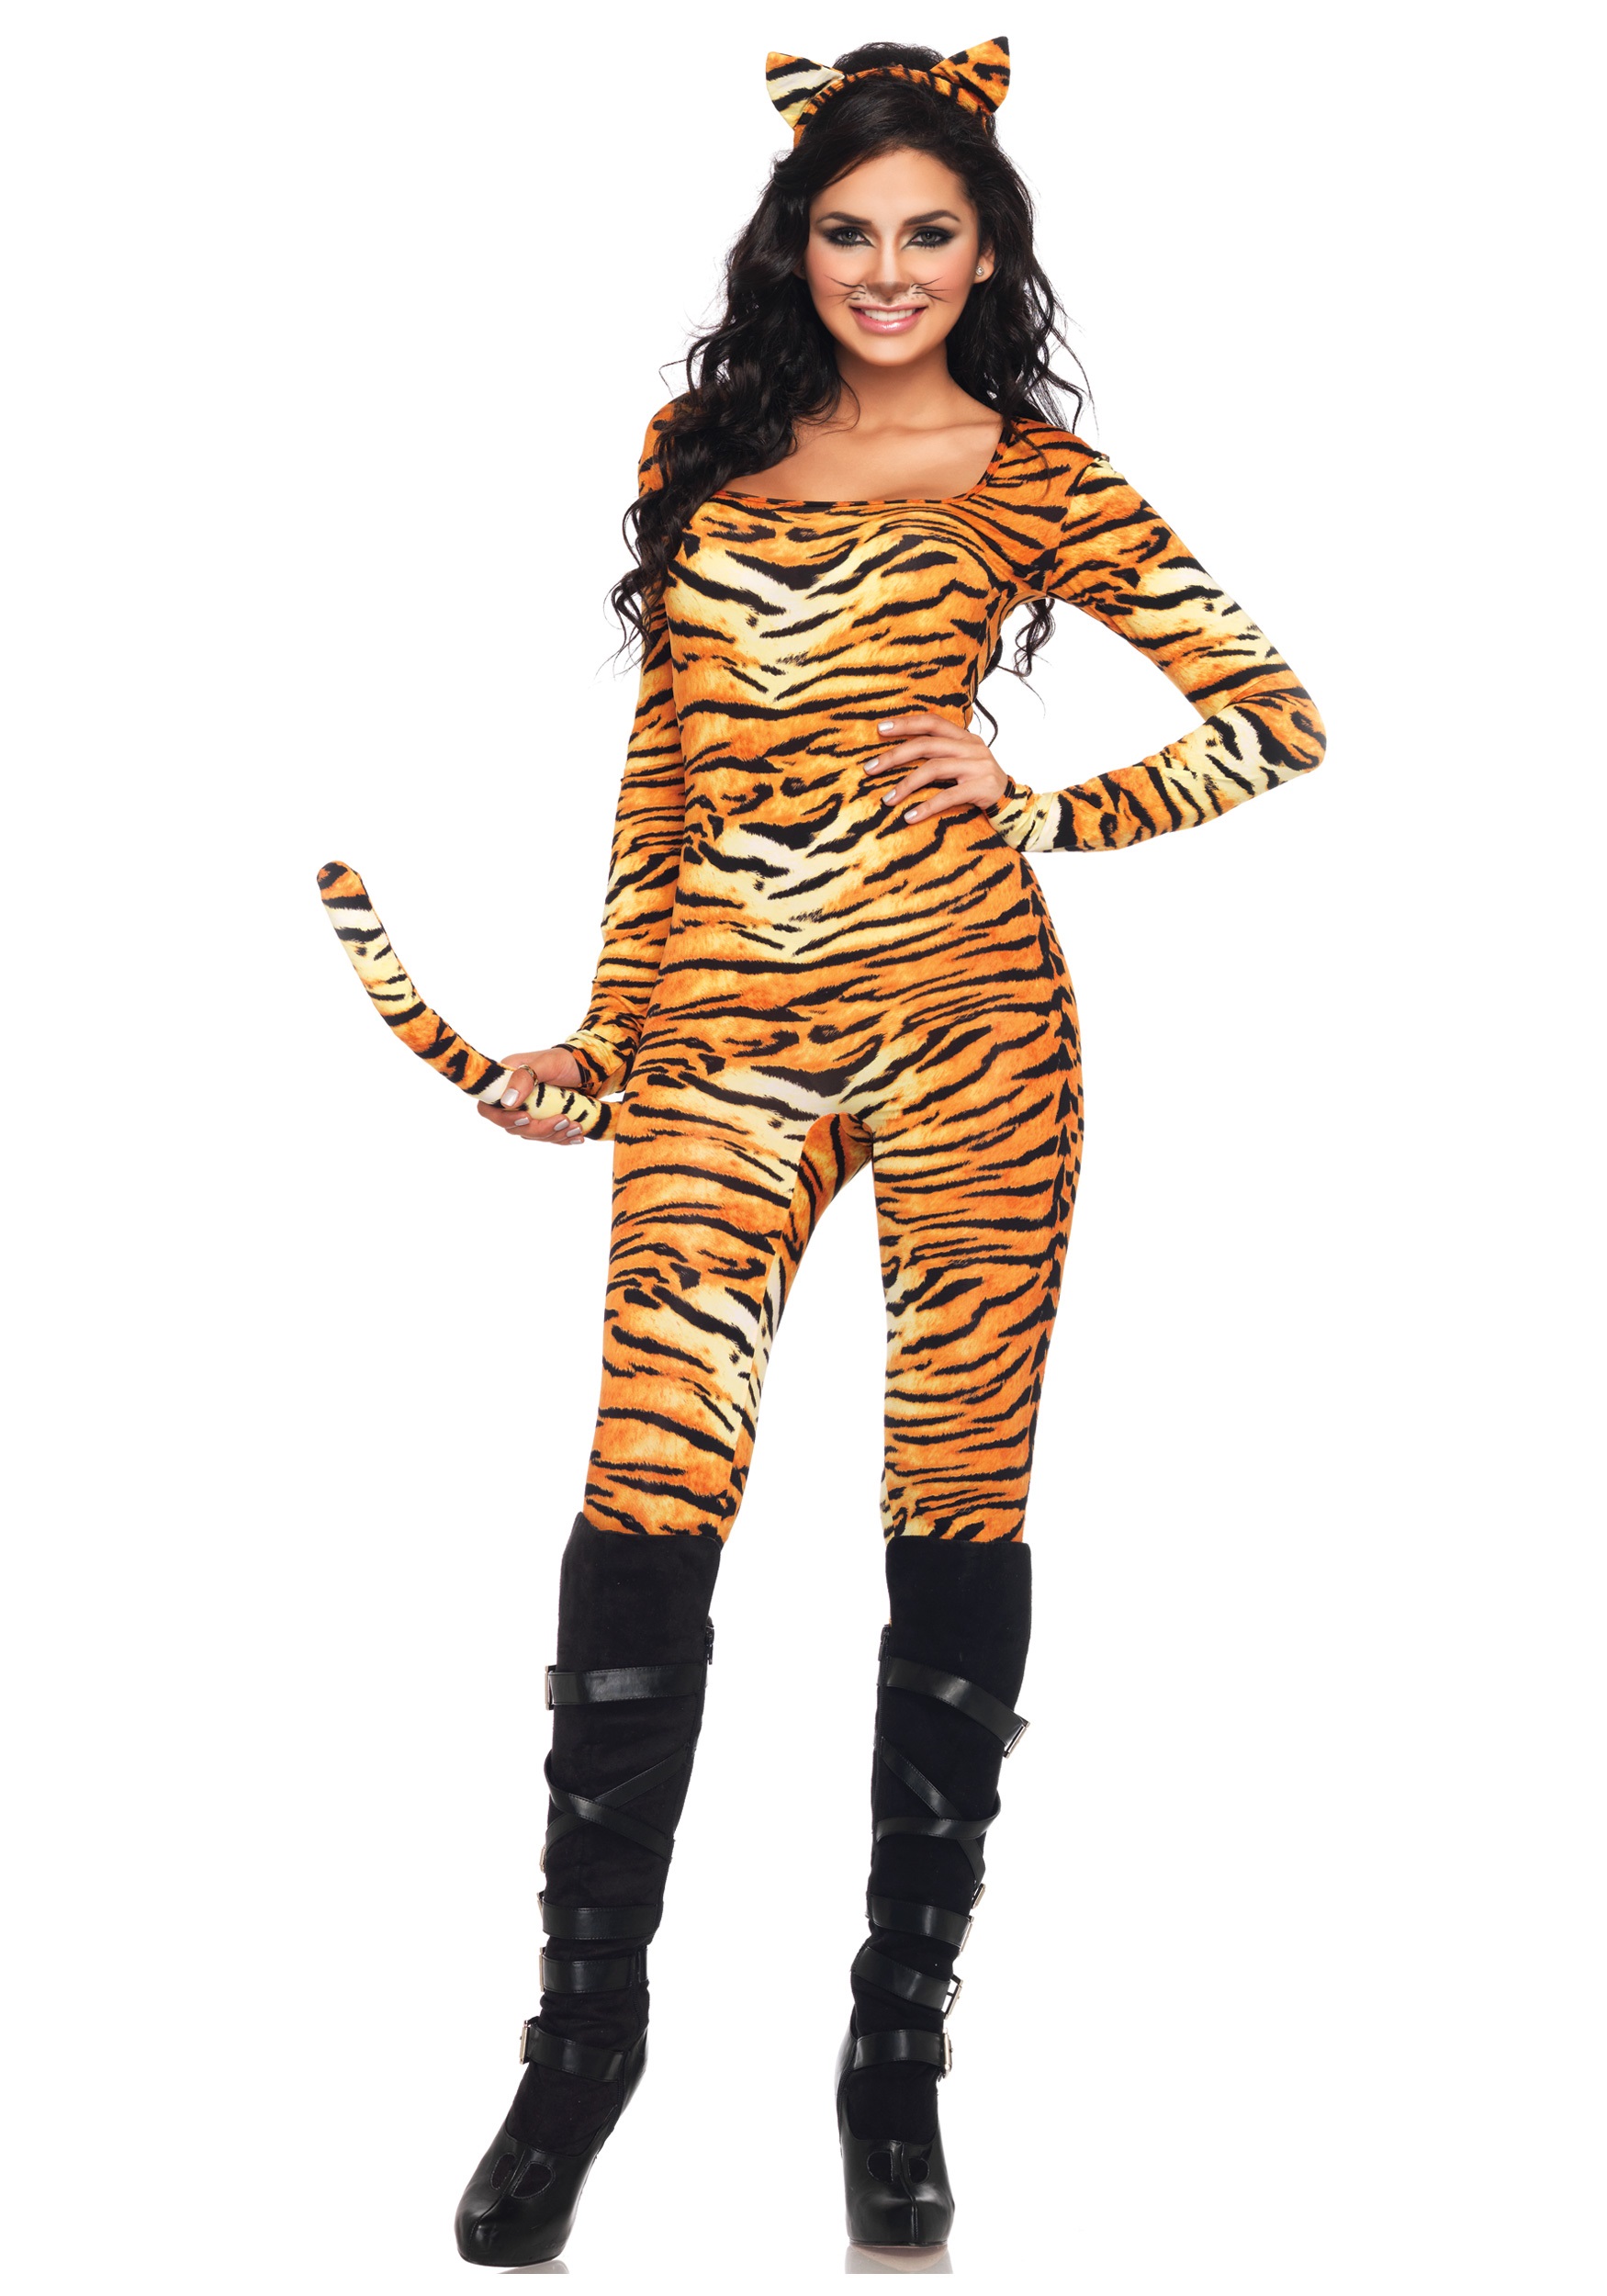 Sexy Wild Tiger Fancy Dress Costume